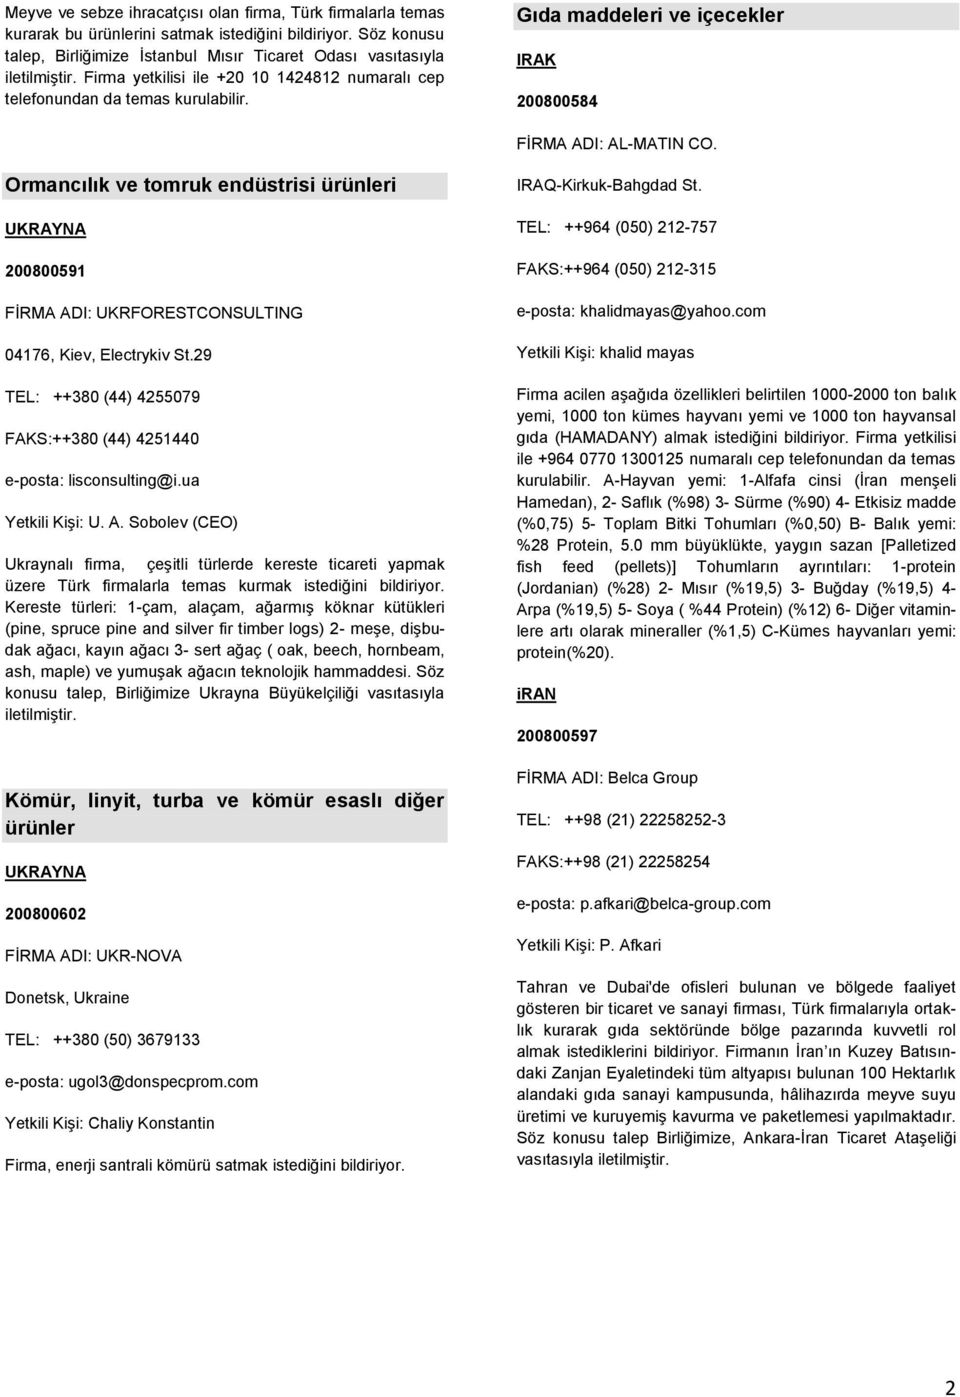 Ormancılık ve tomruk endüstrisi ürünleri UKRAYNA 200800591 FĠRMA ADI: UKRFORESTCONSULTING 04176, Kiev, Electrykiv St.29 TEL: ++380 (44) 4255079 FAKS:++380 (44) 4251440 e-posta: lisconsulting@i.